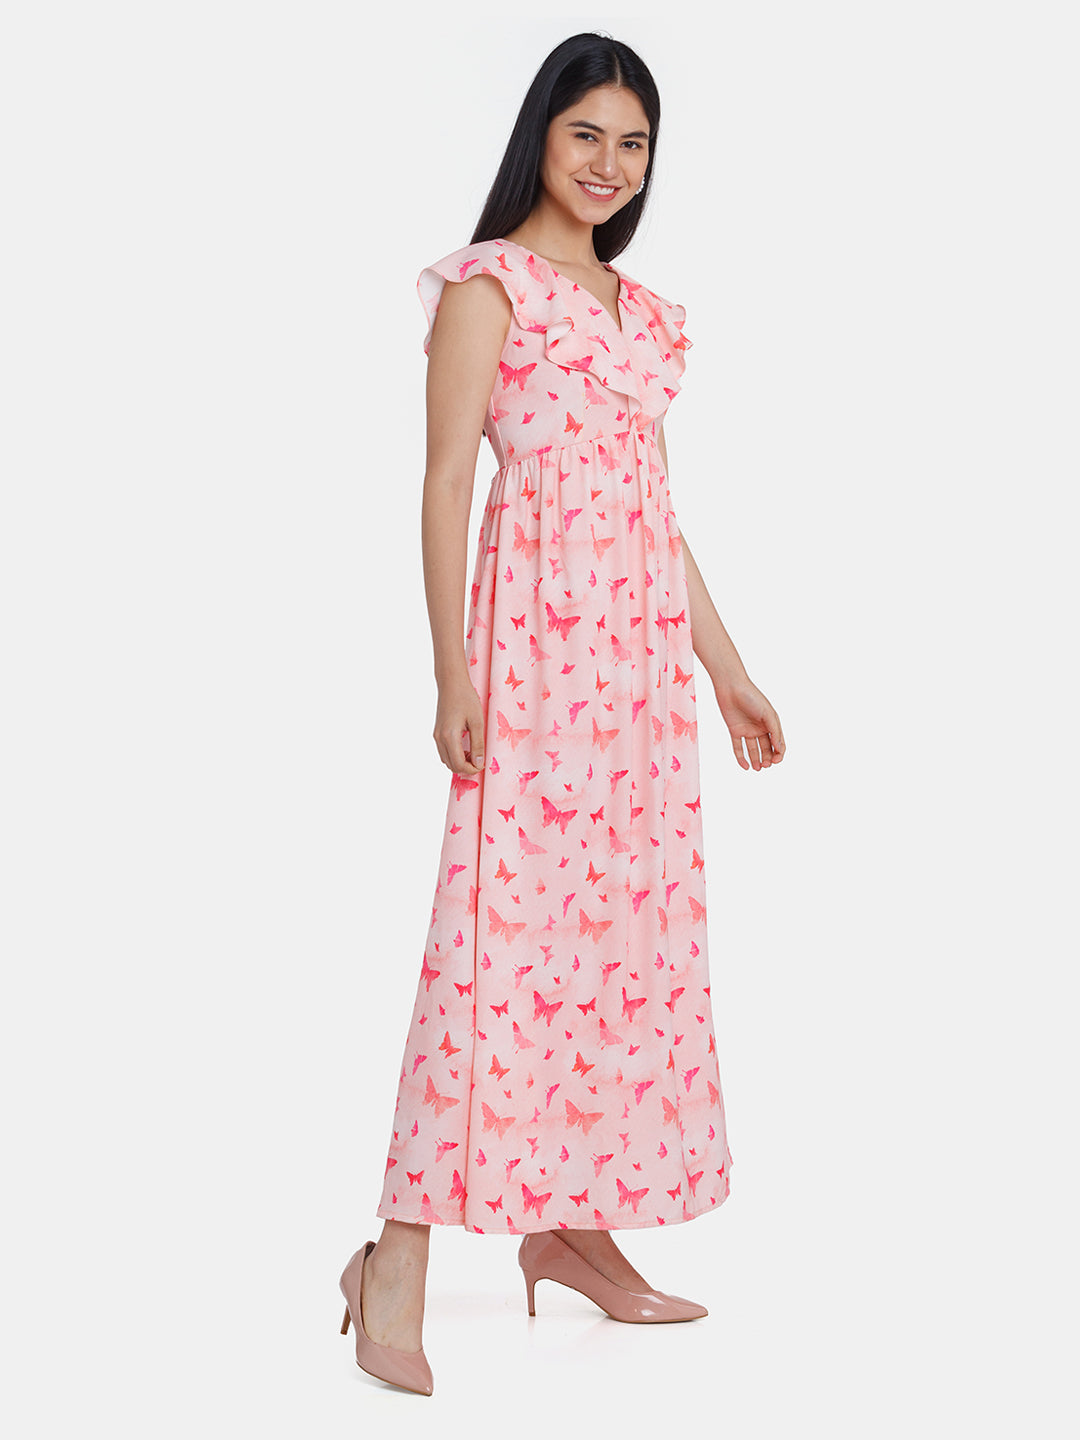 Pink Printed Ruffled Maxi Dress For Women